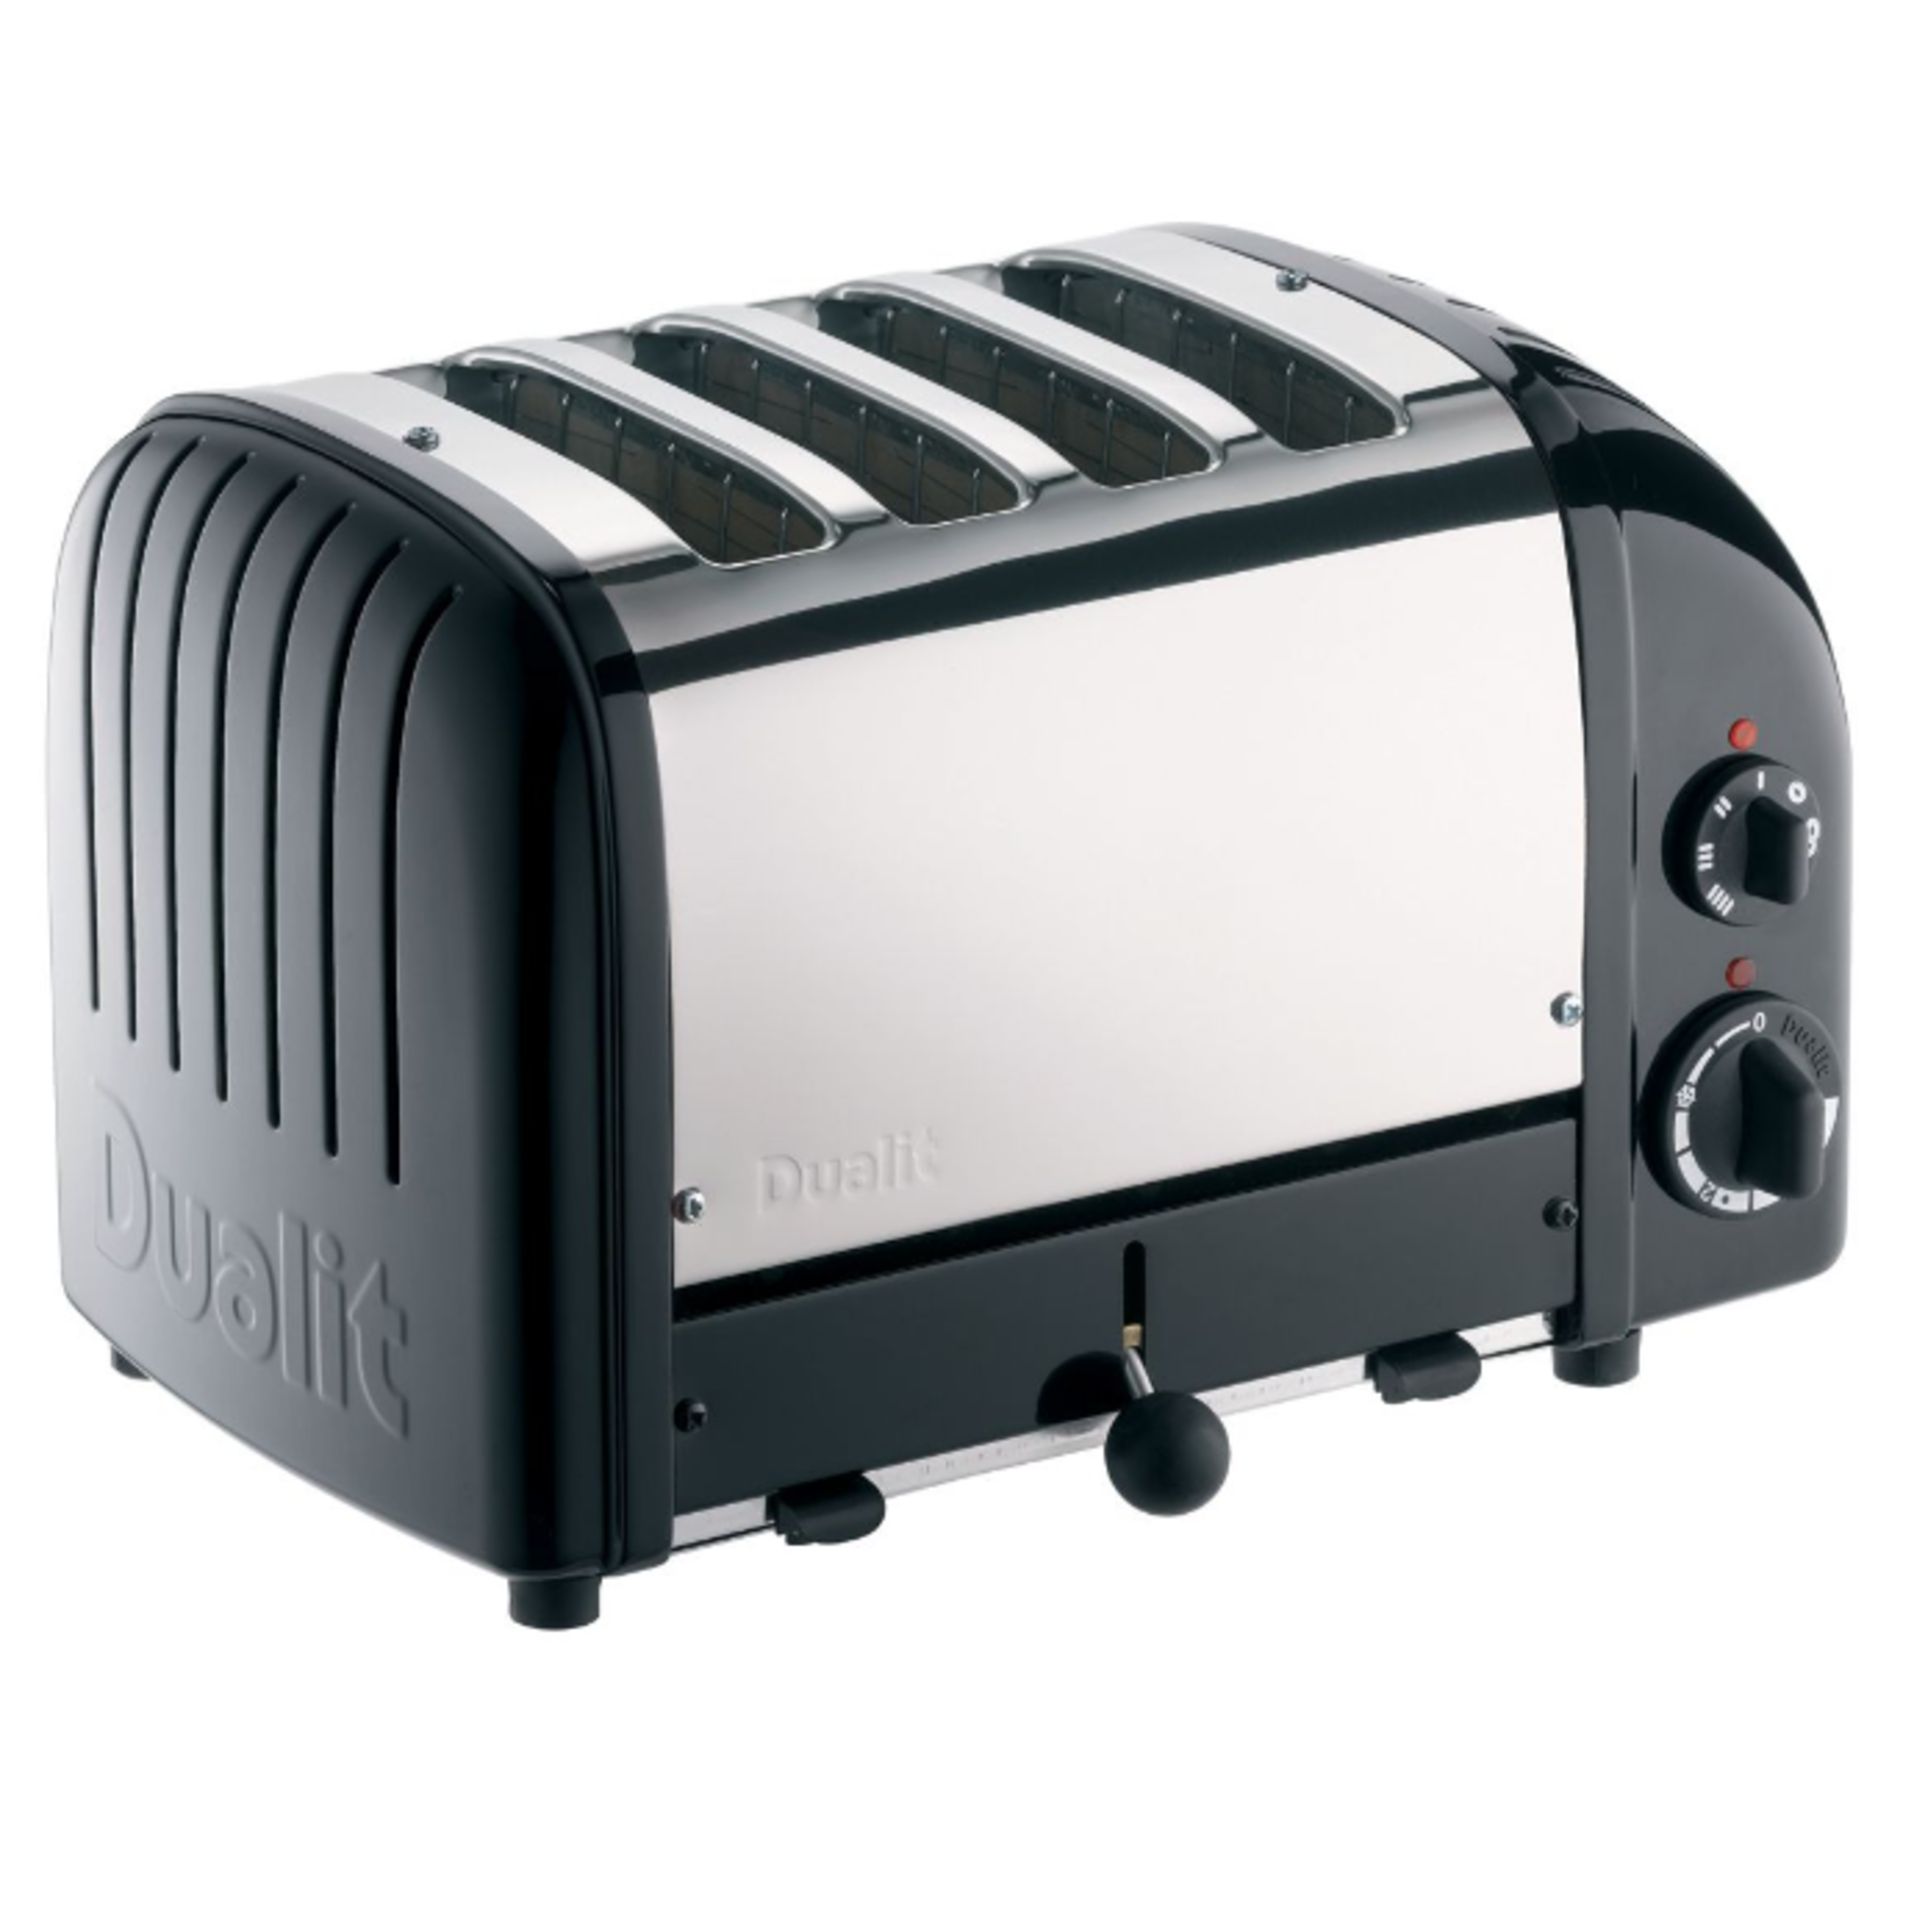 Dualit NewGen 4-Slice Toaster, Black RRP £220